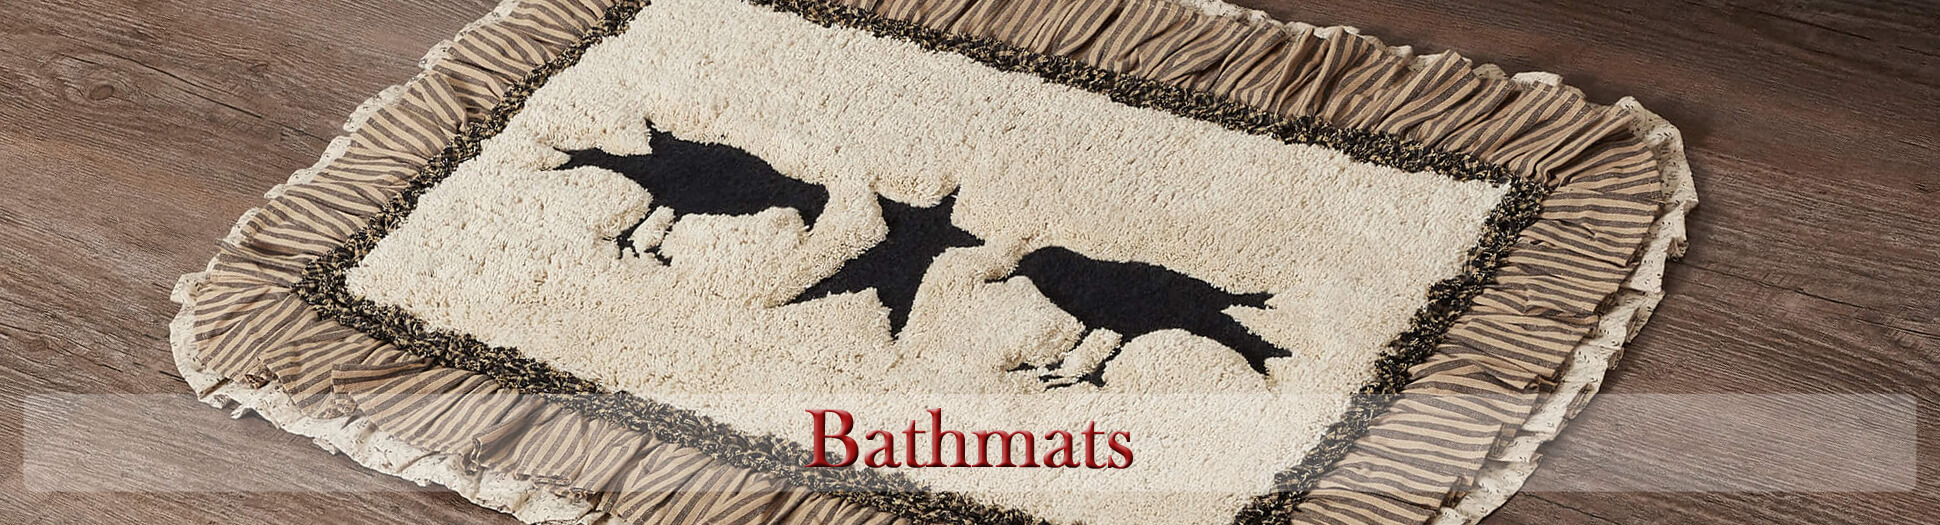 Bathmats from VHC Brands